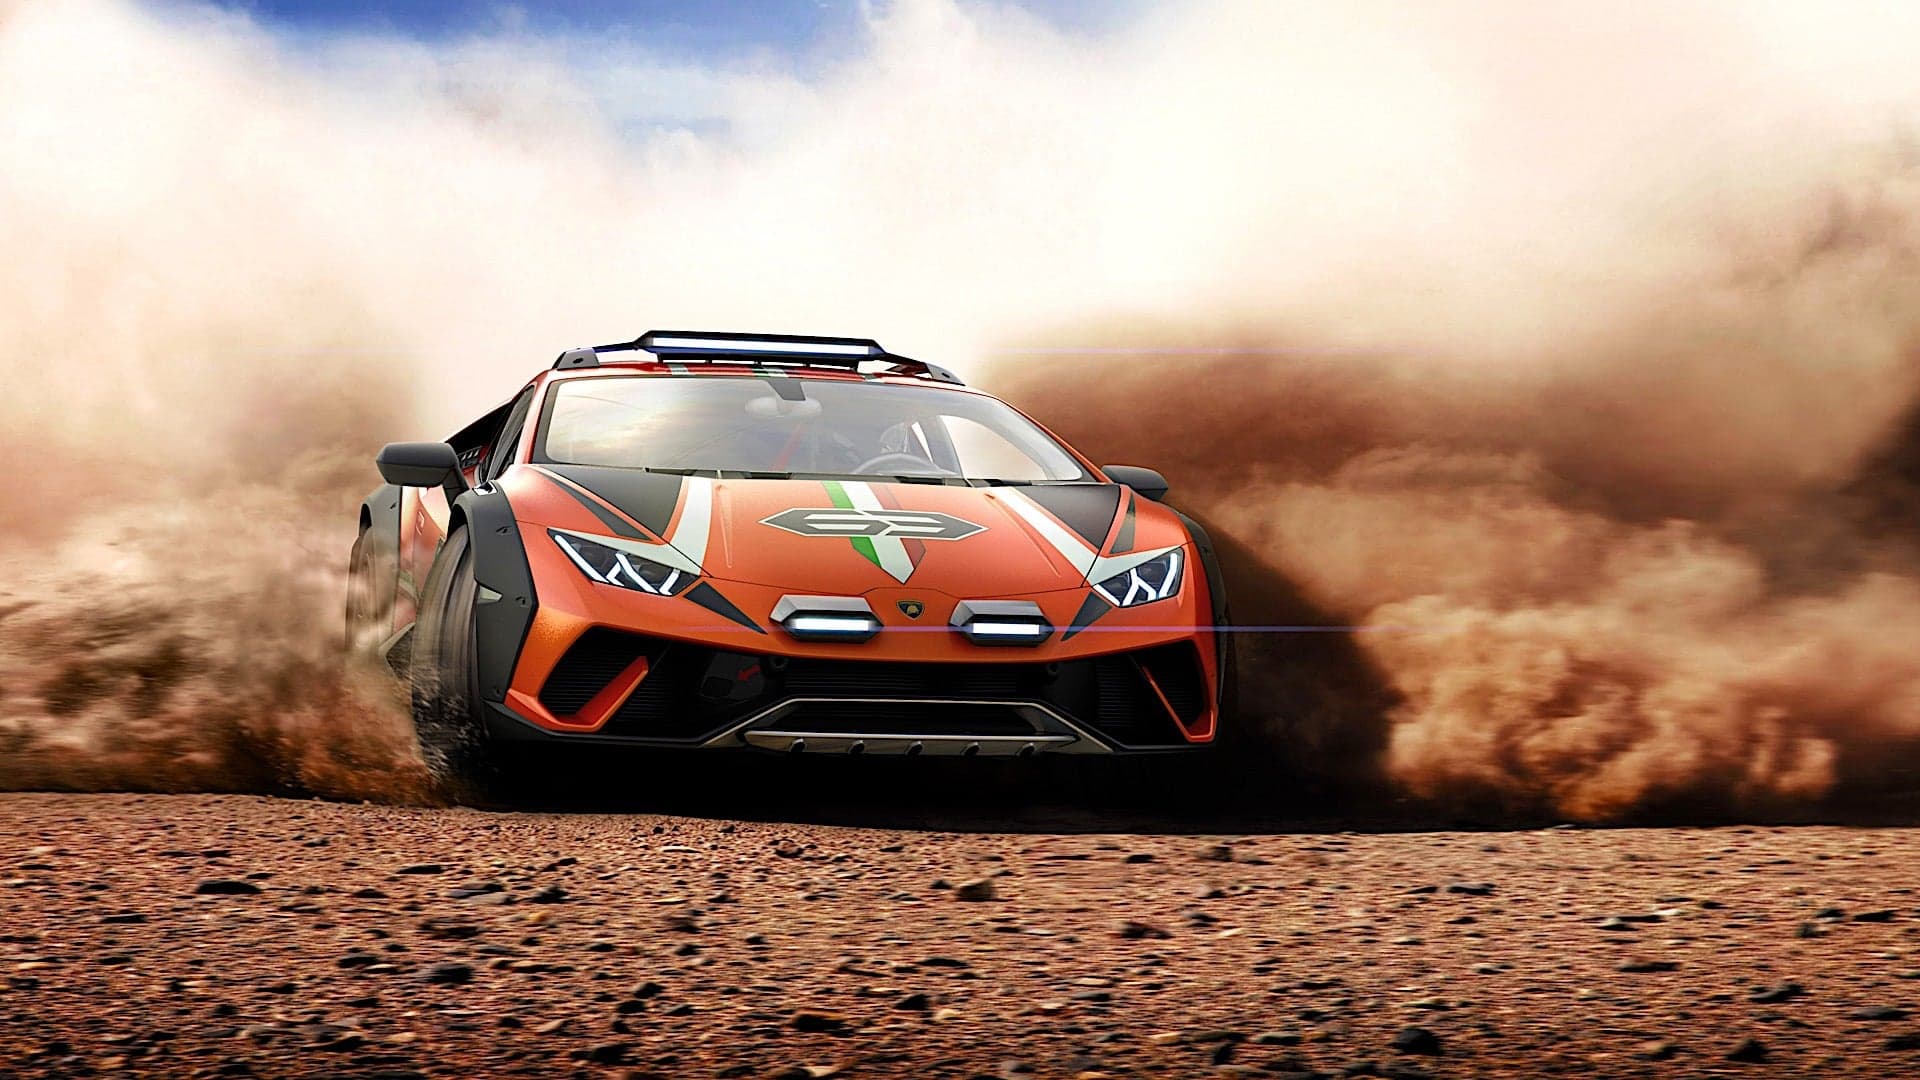 Lamborghini’s Huracán Sterrato Concept Brings Italian Insanity to Dirt and Mud